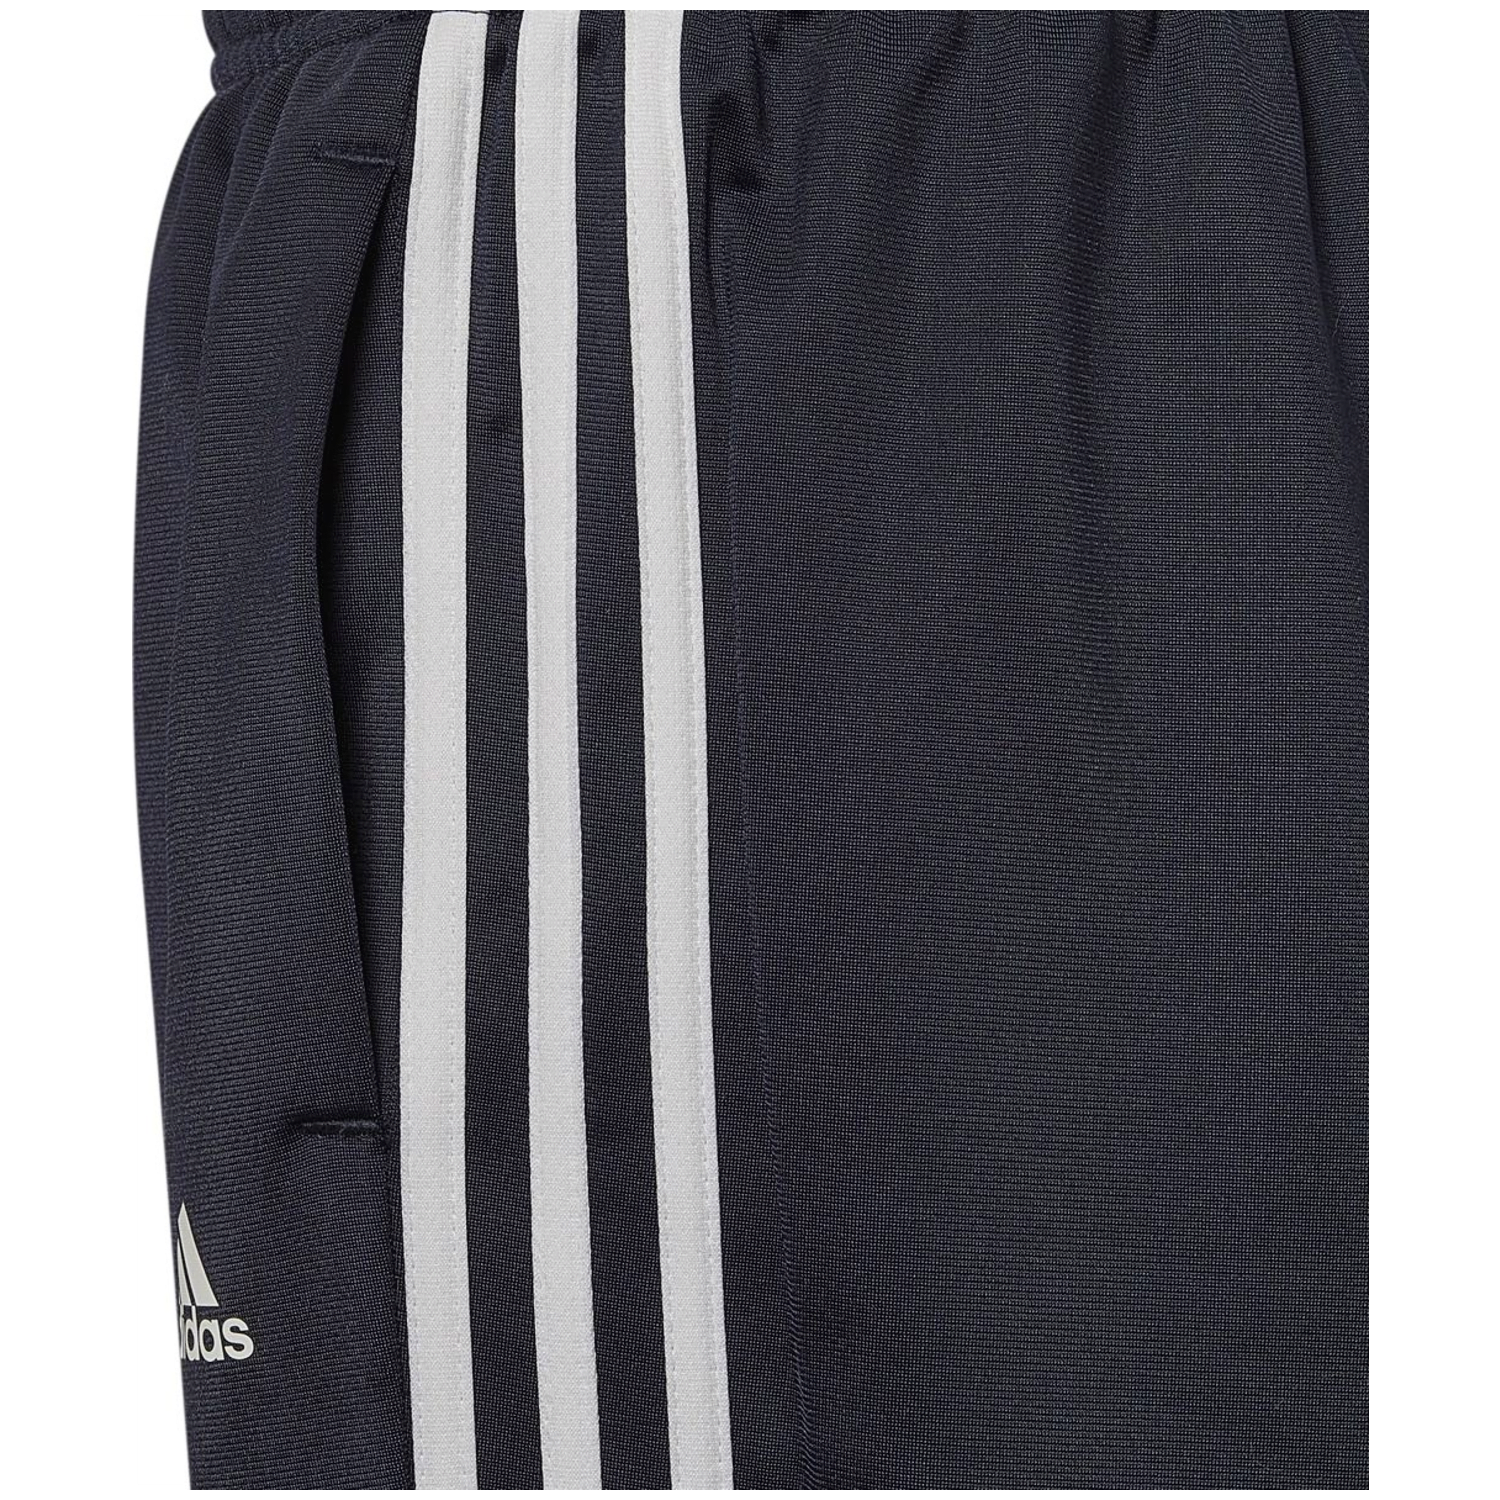 Adidas Essentials Trainingsanzug Jungen